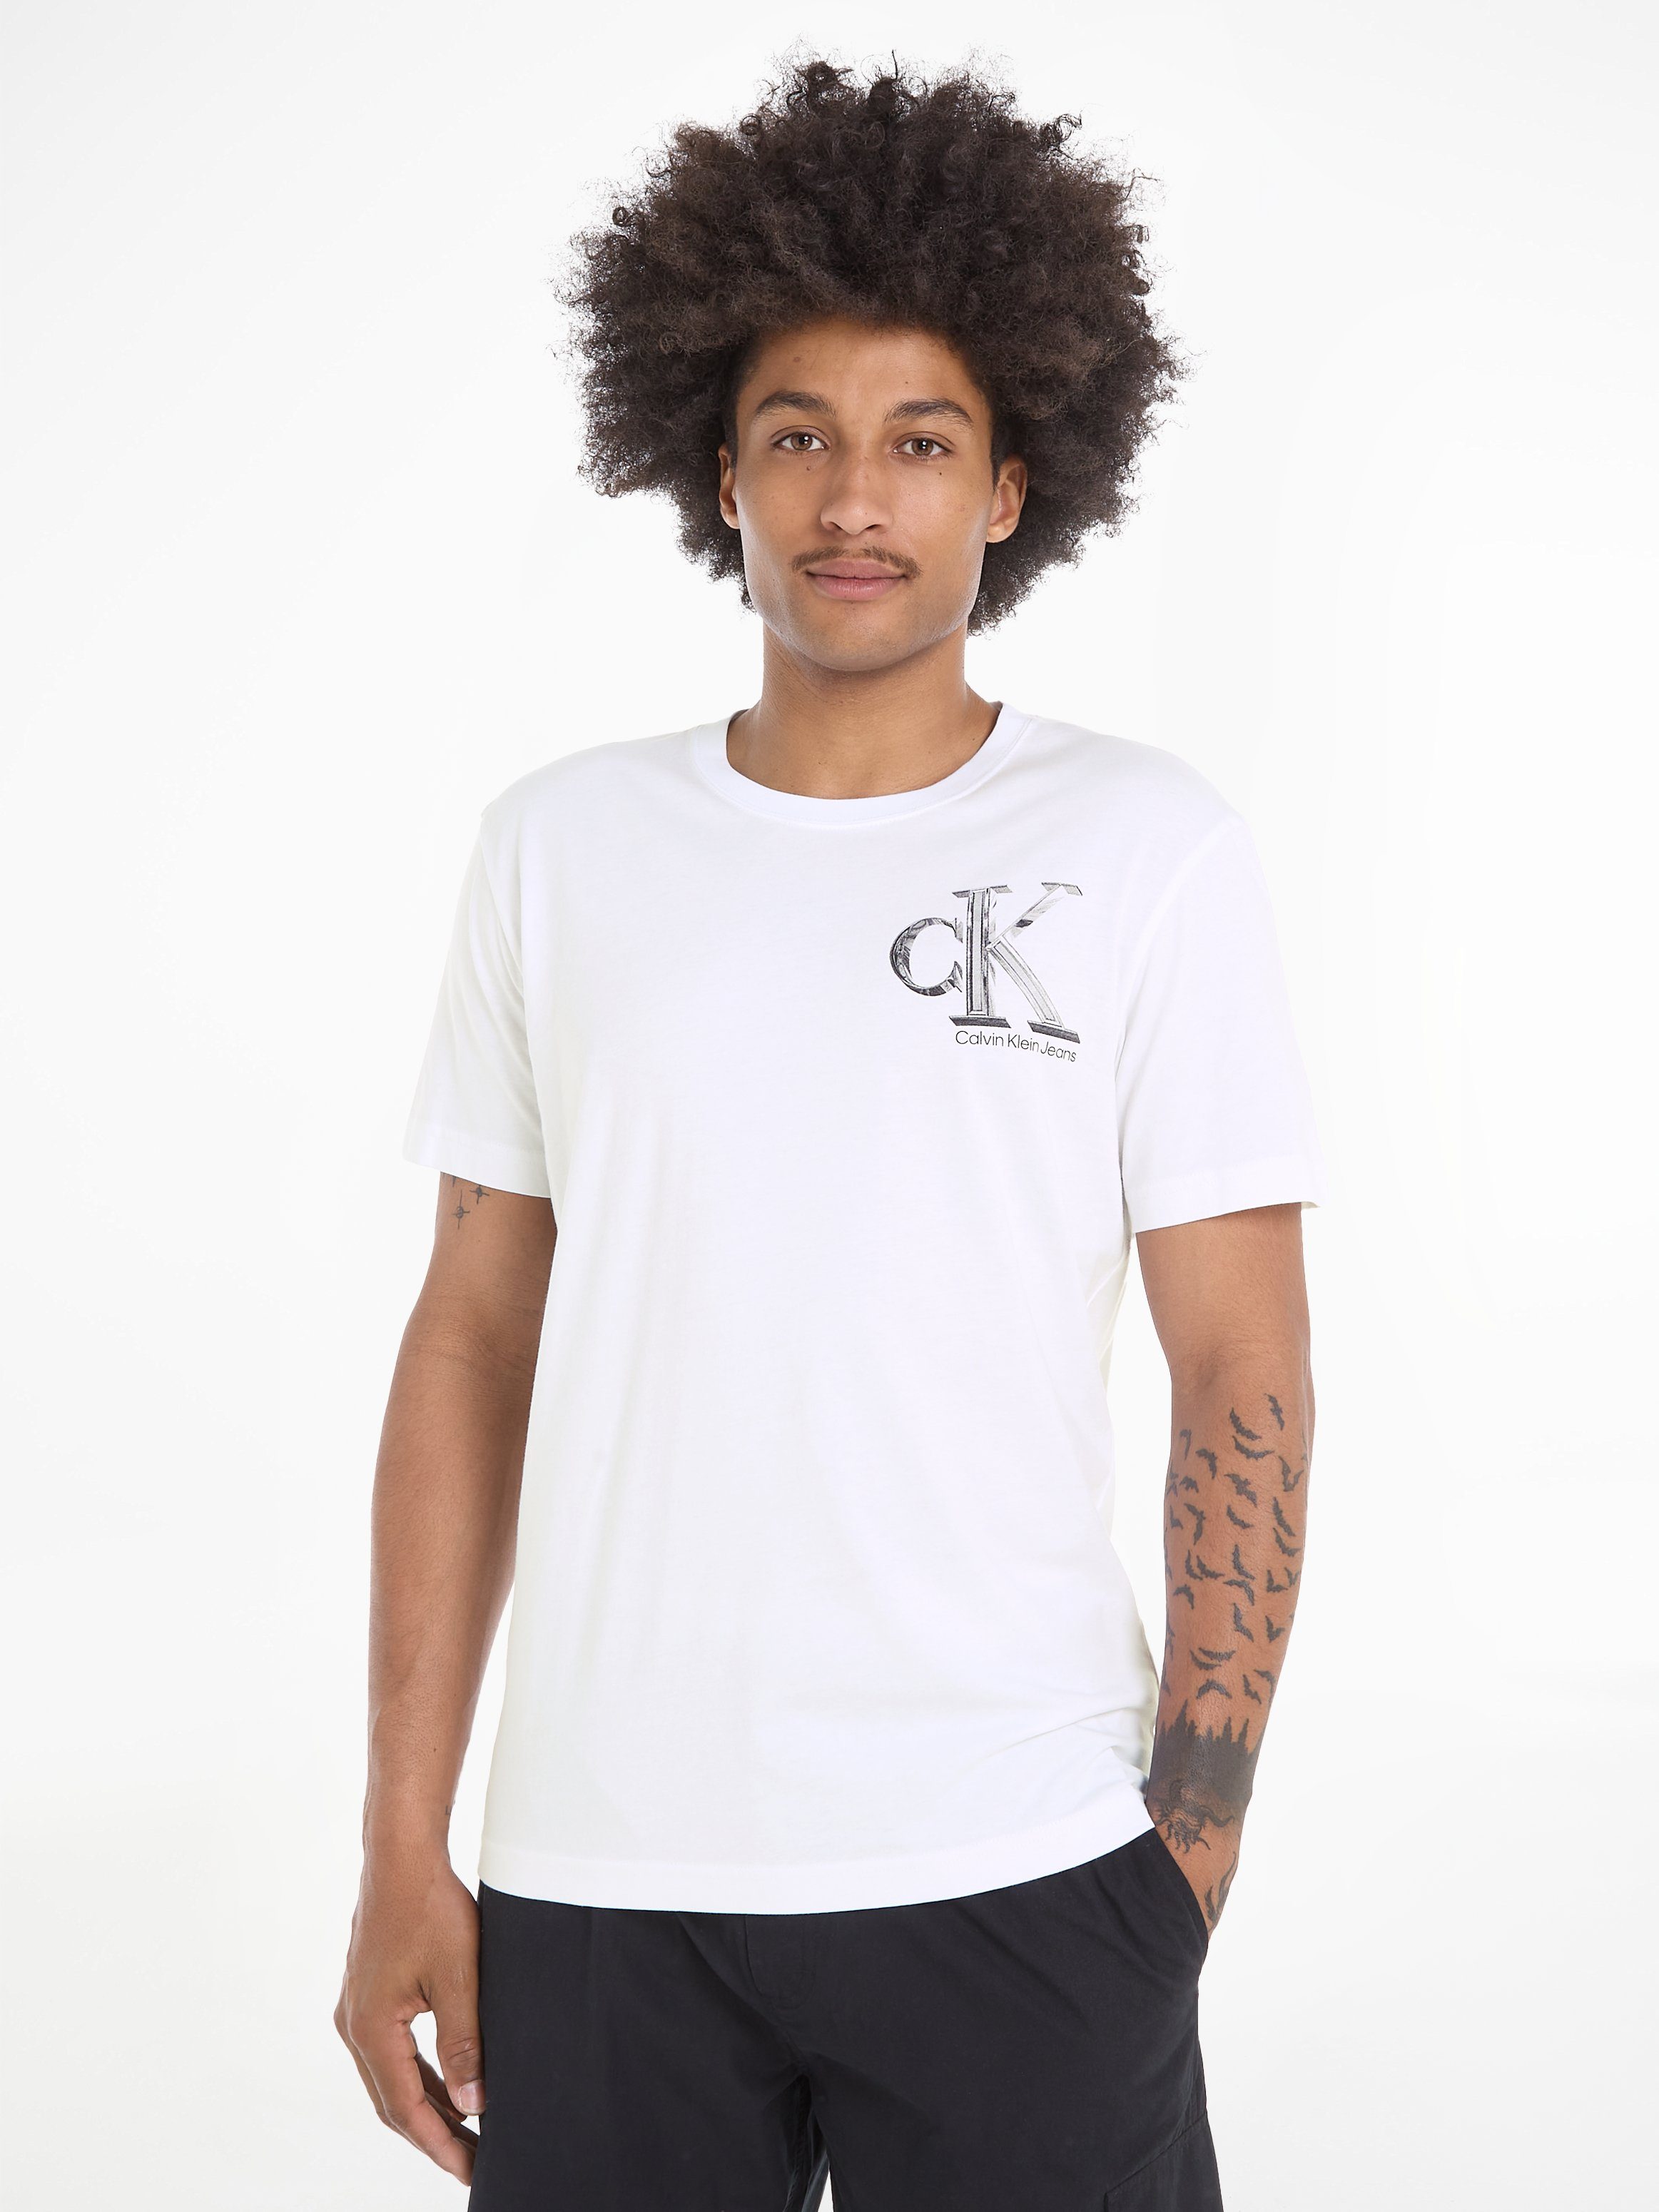 Calvin Klein Jeans Monogram T-shirt Lente Zomer Collectie White Heren